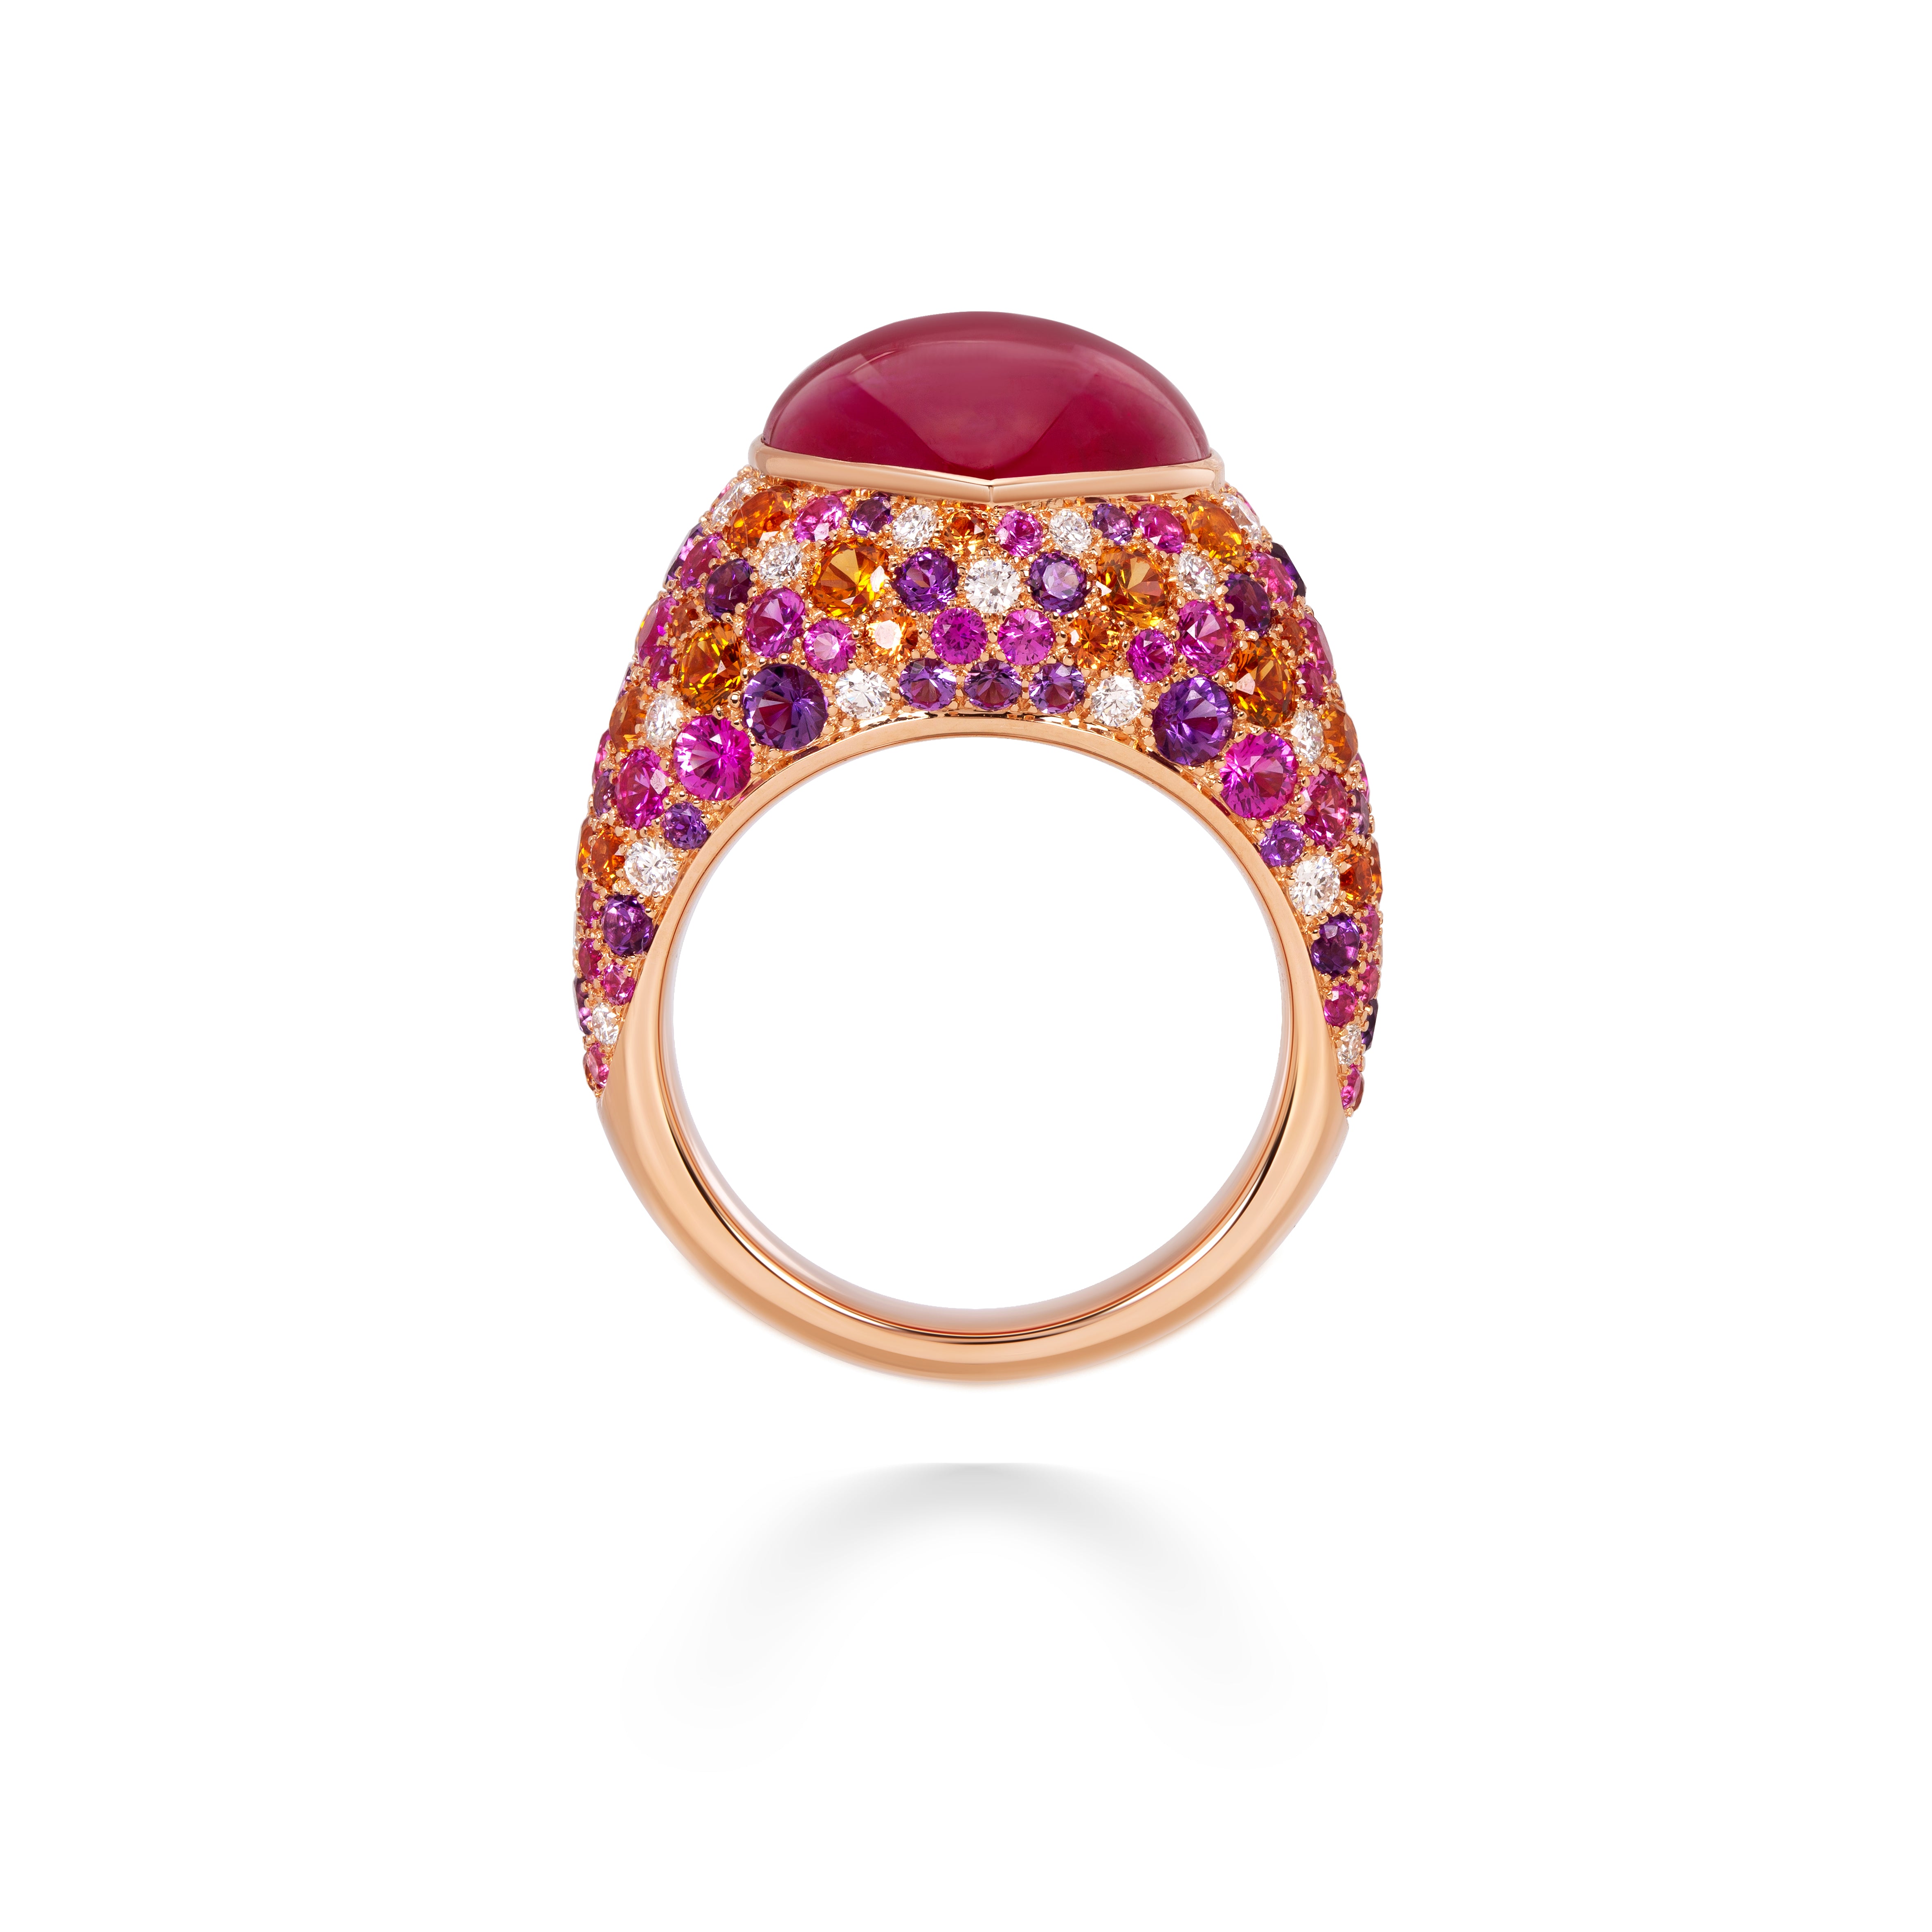 The Calvina Ruby Ring